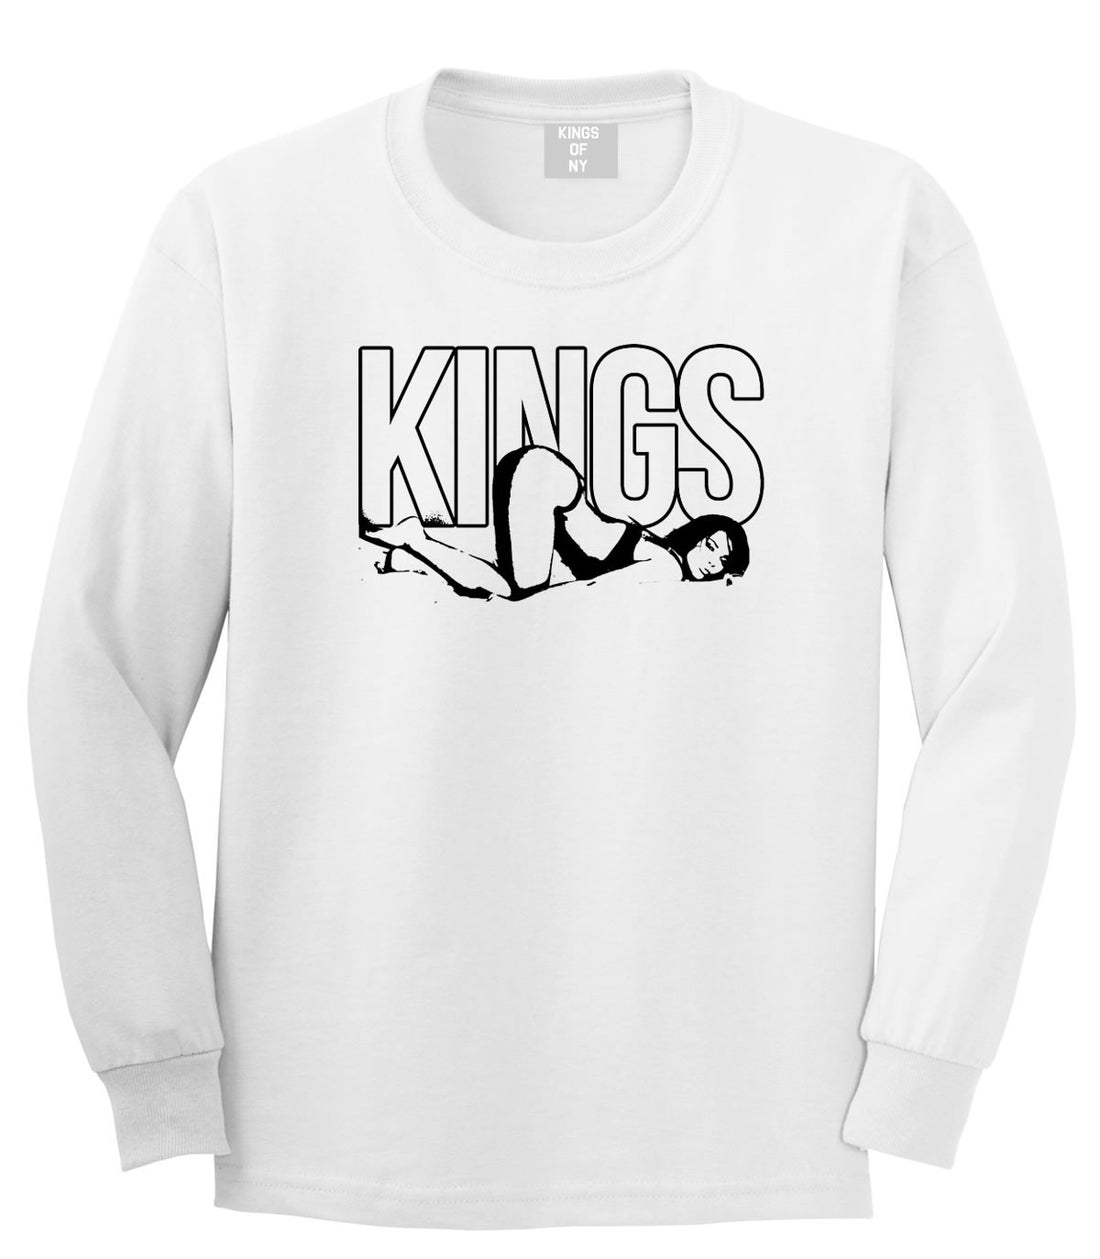 Kings Girl Streetwear Long Sleeve T-Shirt in White by Kings Of NY